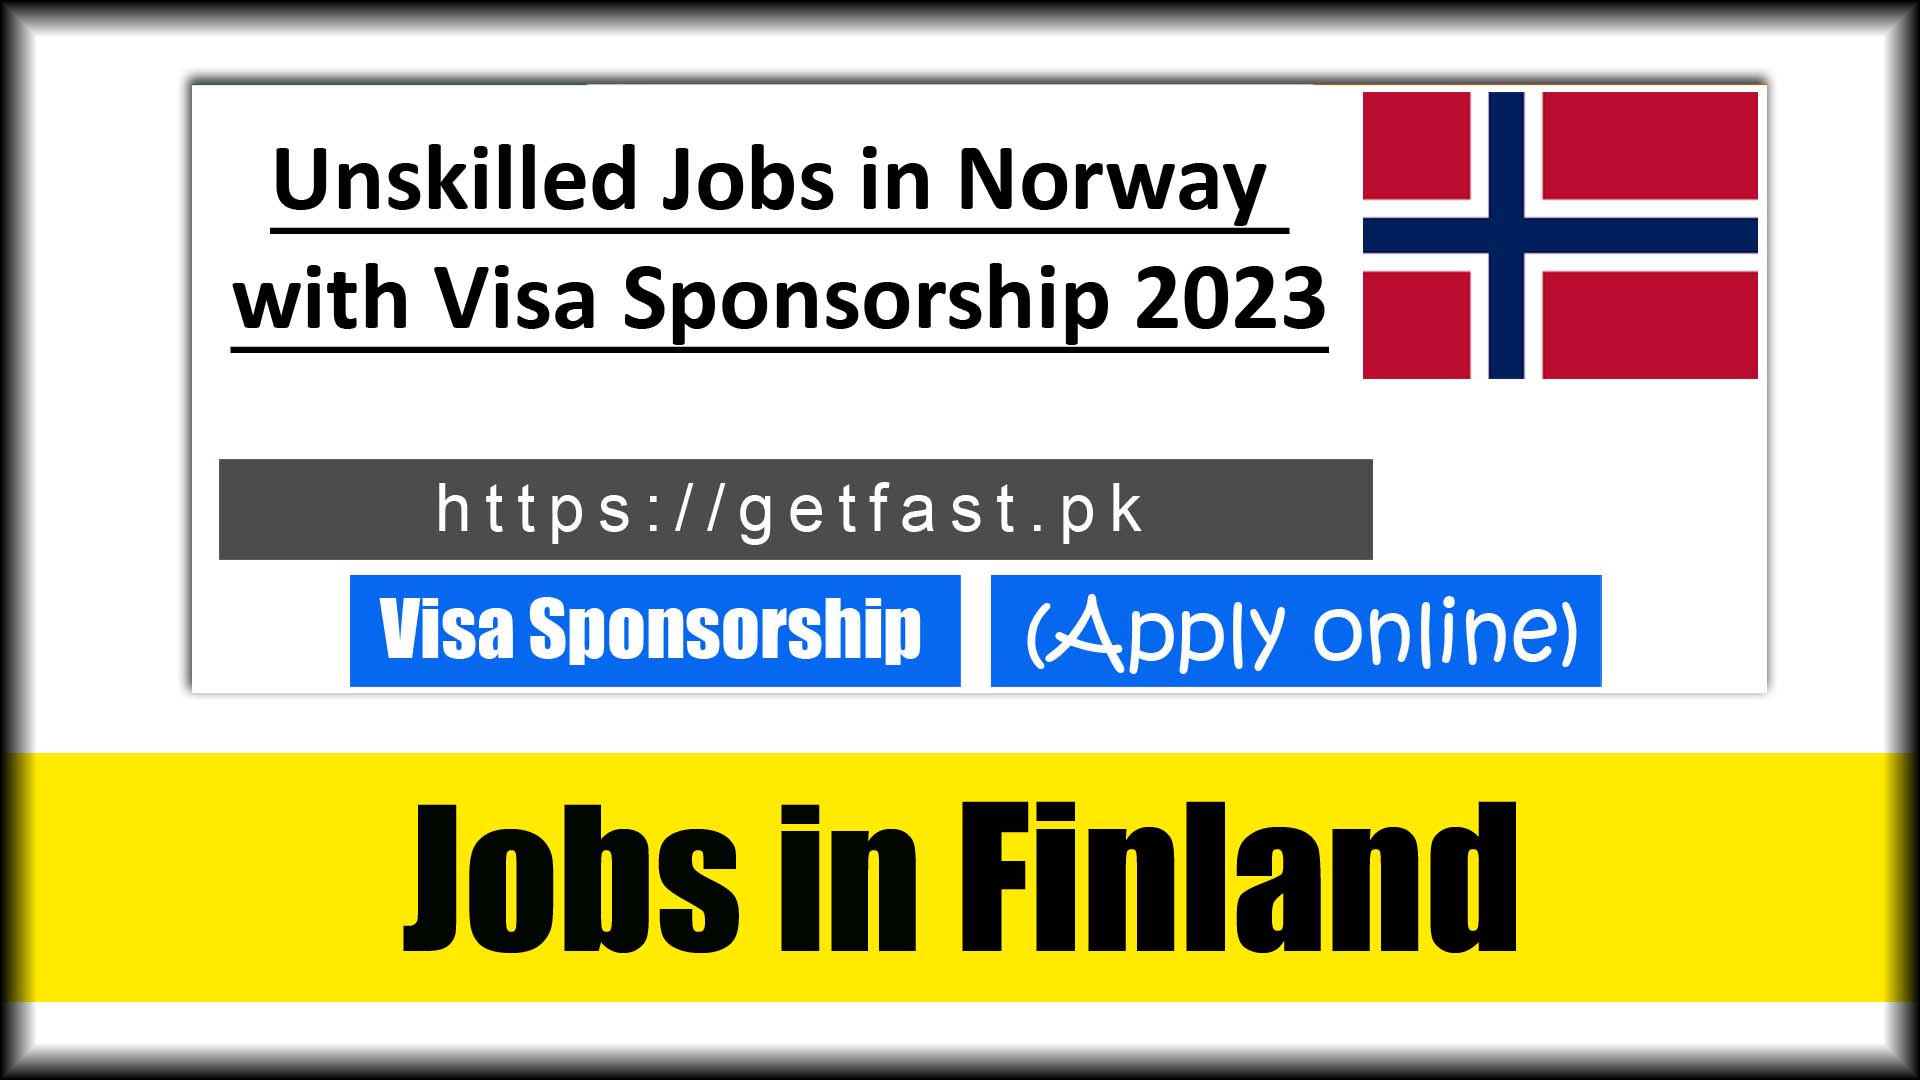 Unskilled Jobs in Norway with Visa Sponsorship 2023 (Online Apply)